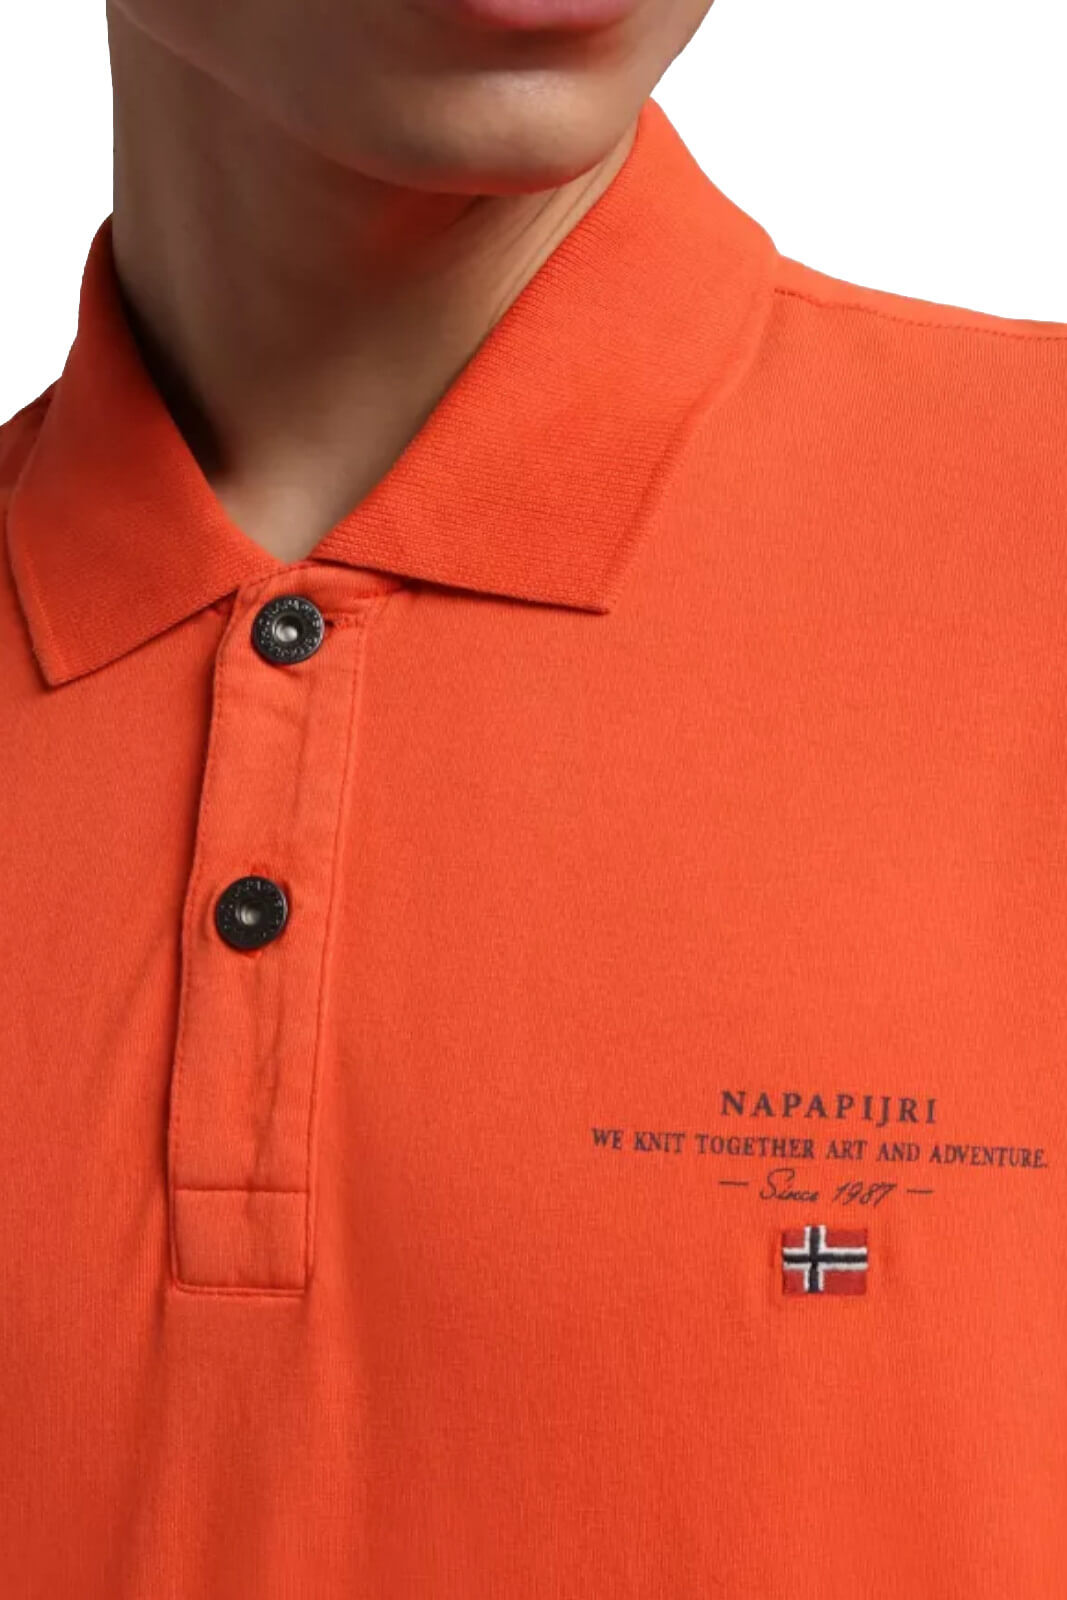 Napapijri men's polo short sleeve Elbas